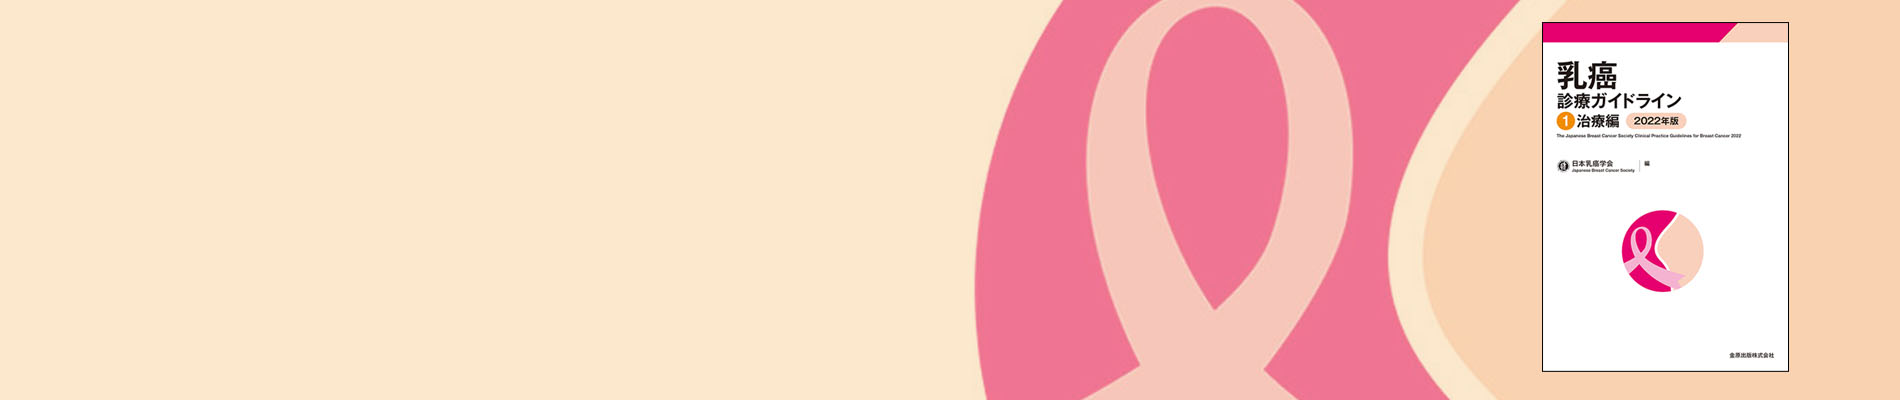 乳癌診療ガイドライン2022年版 | 一般社団法人 日本乳癌学会発行